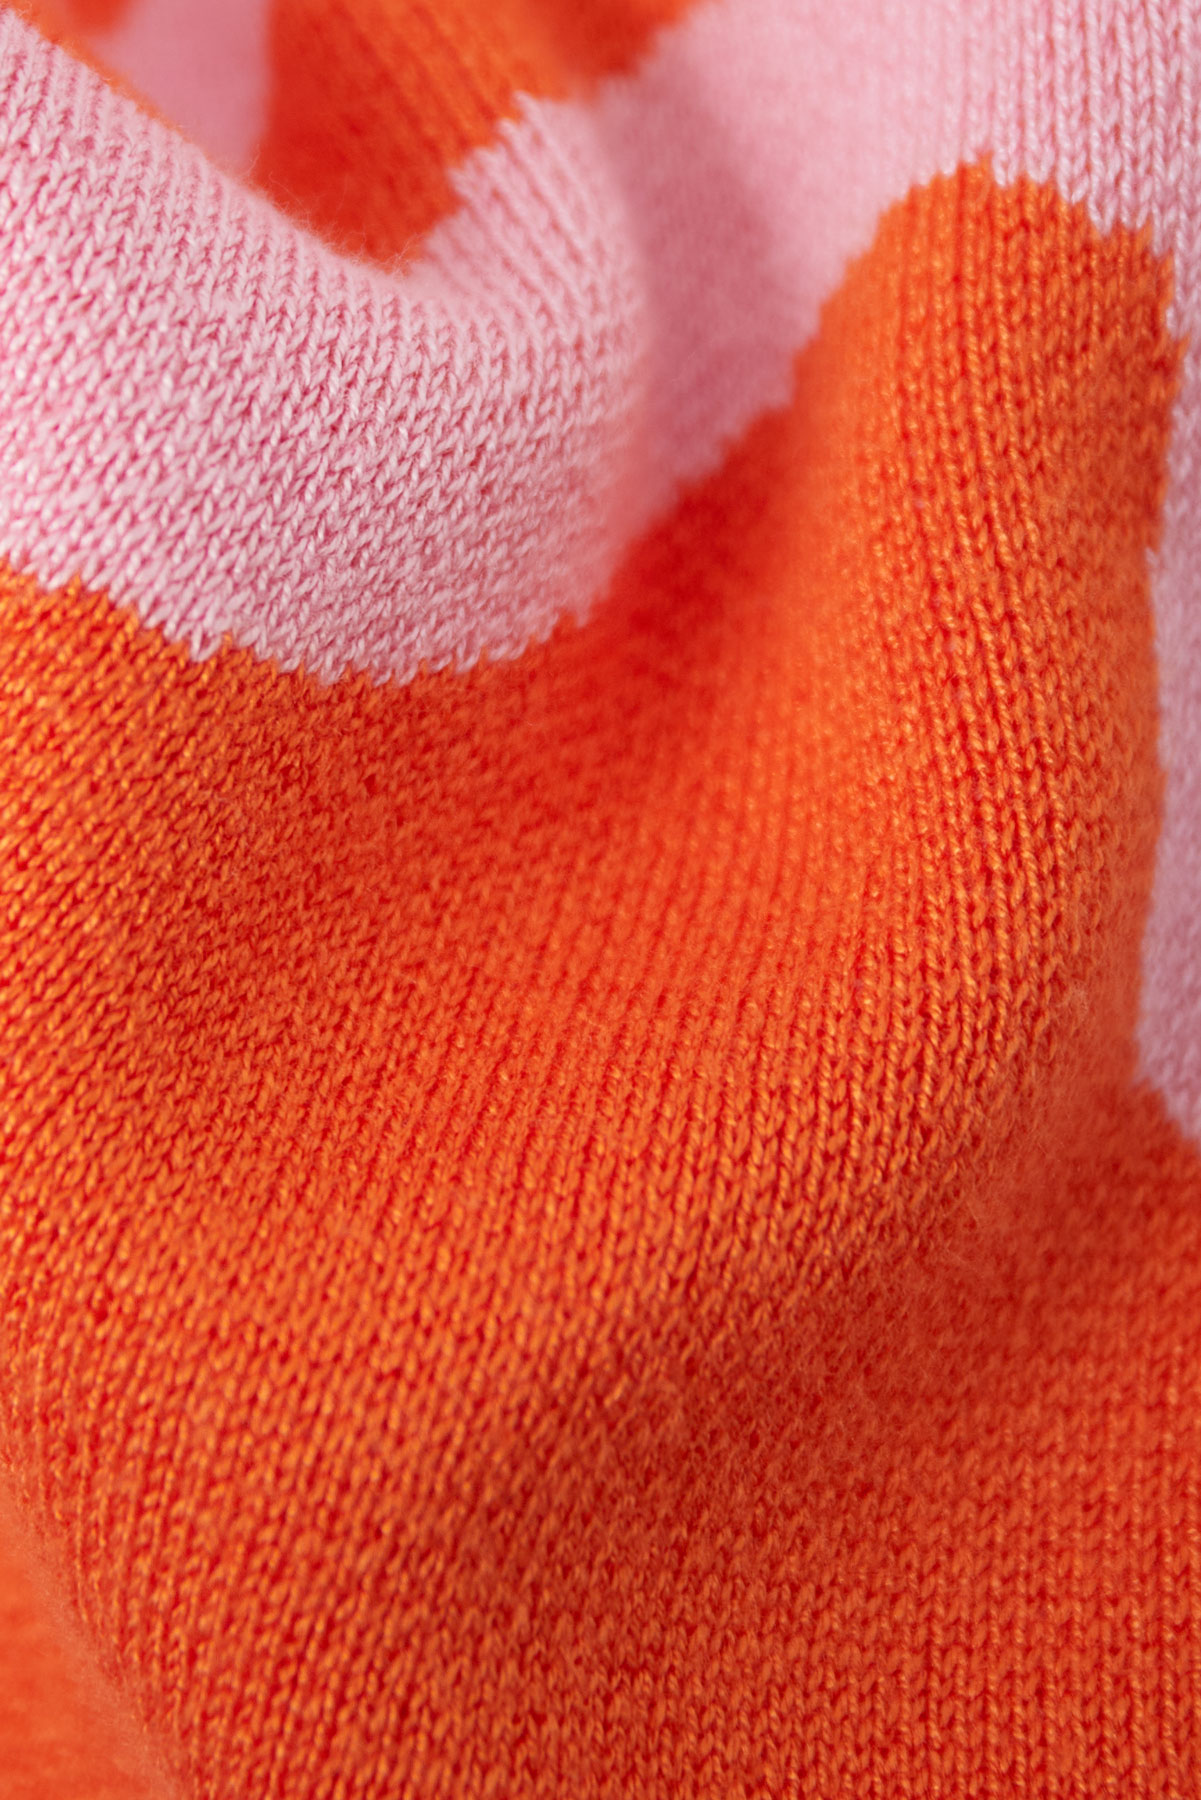 Pantolon organik çizgili baskı - turuncu ve pembe h5 Resim9